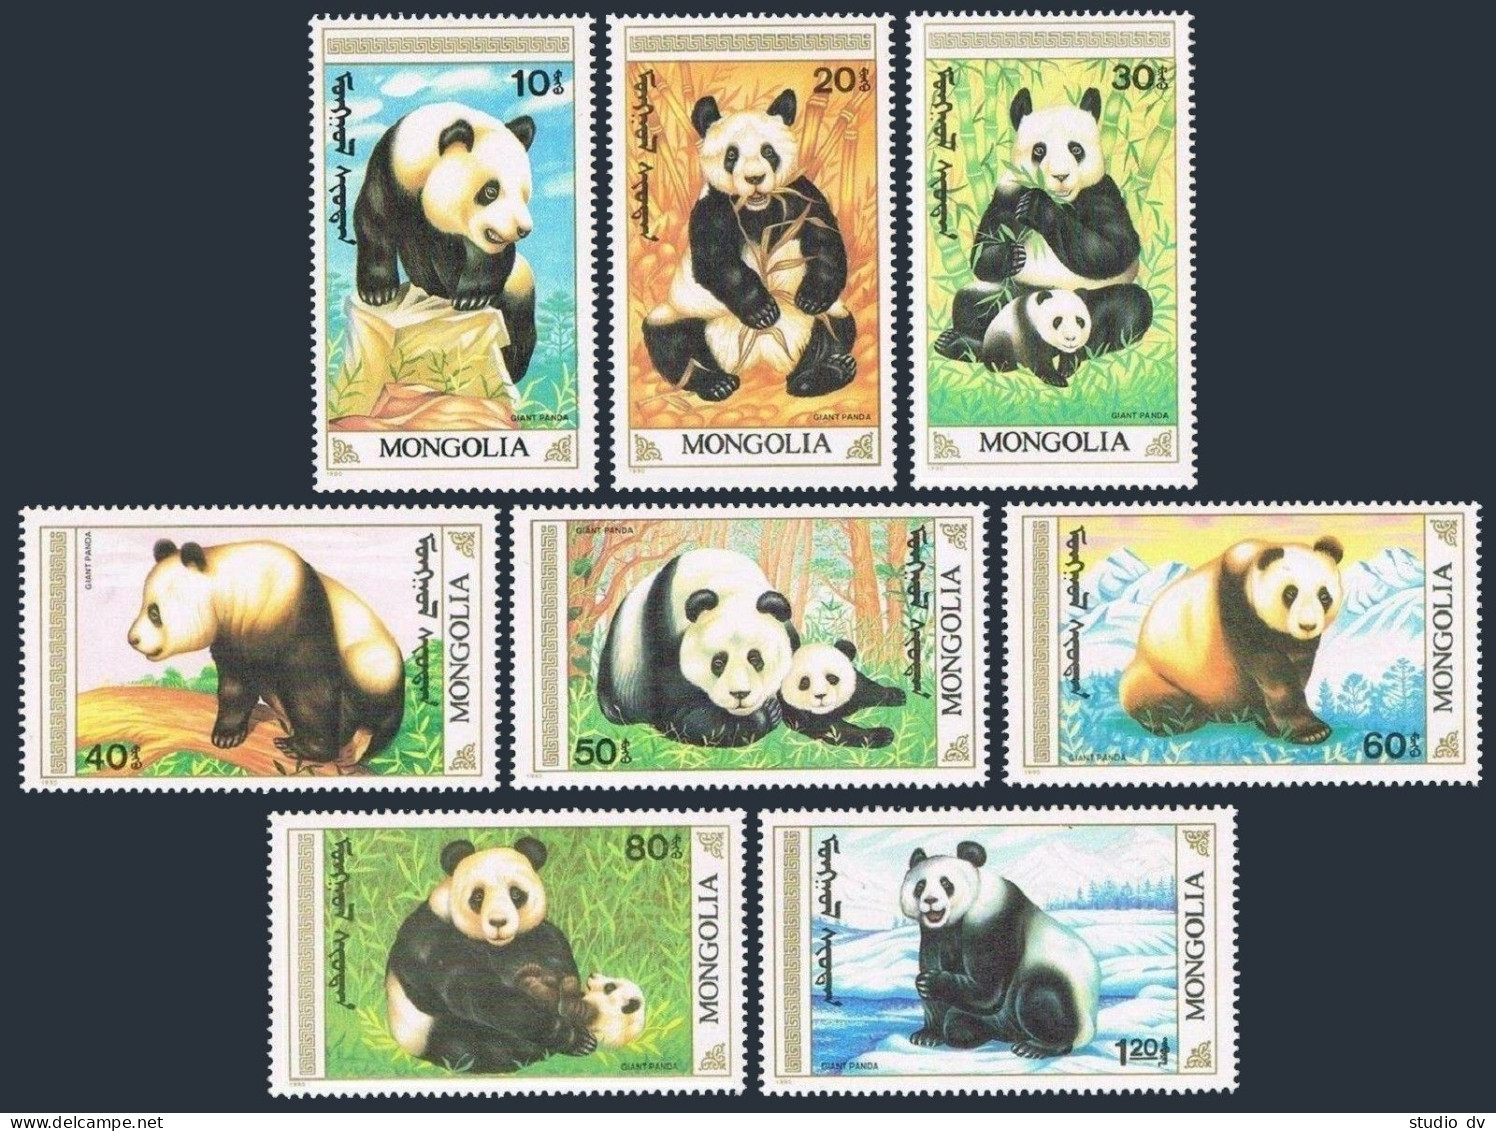 Mongolia 1879-1886,MNH.Michel 2157-2164. Giant Pandas,1990.  - Mongolië